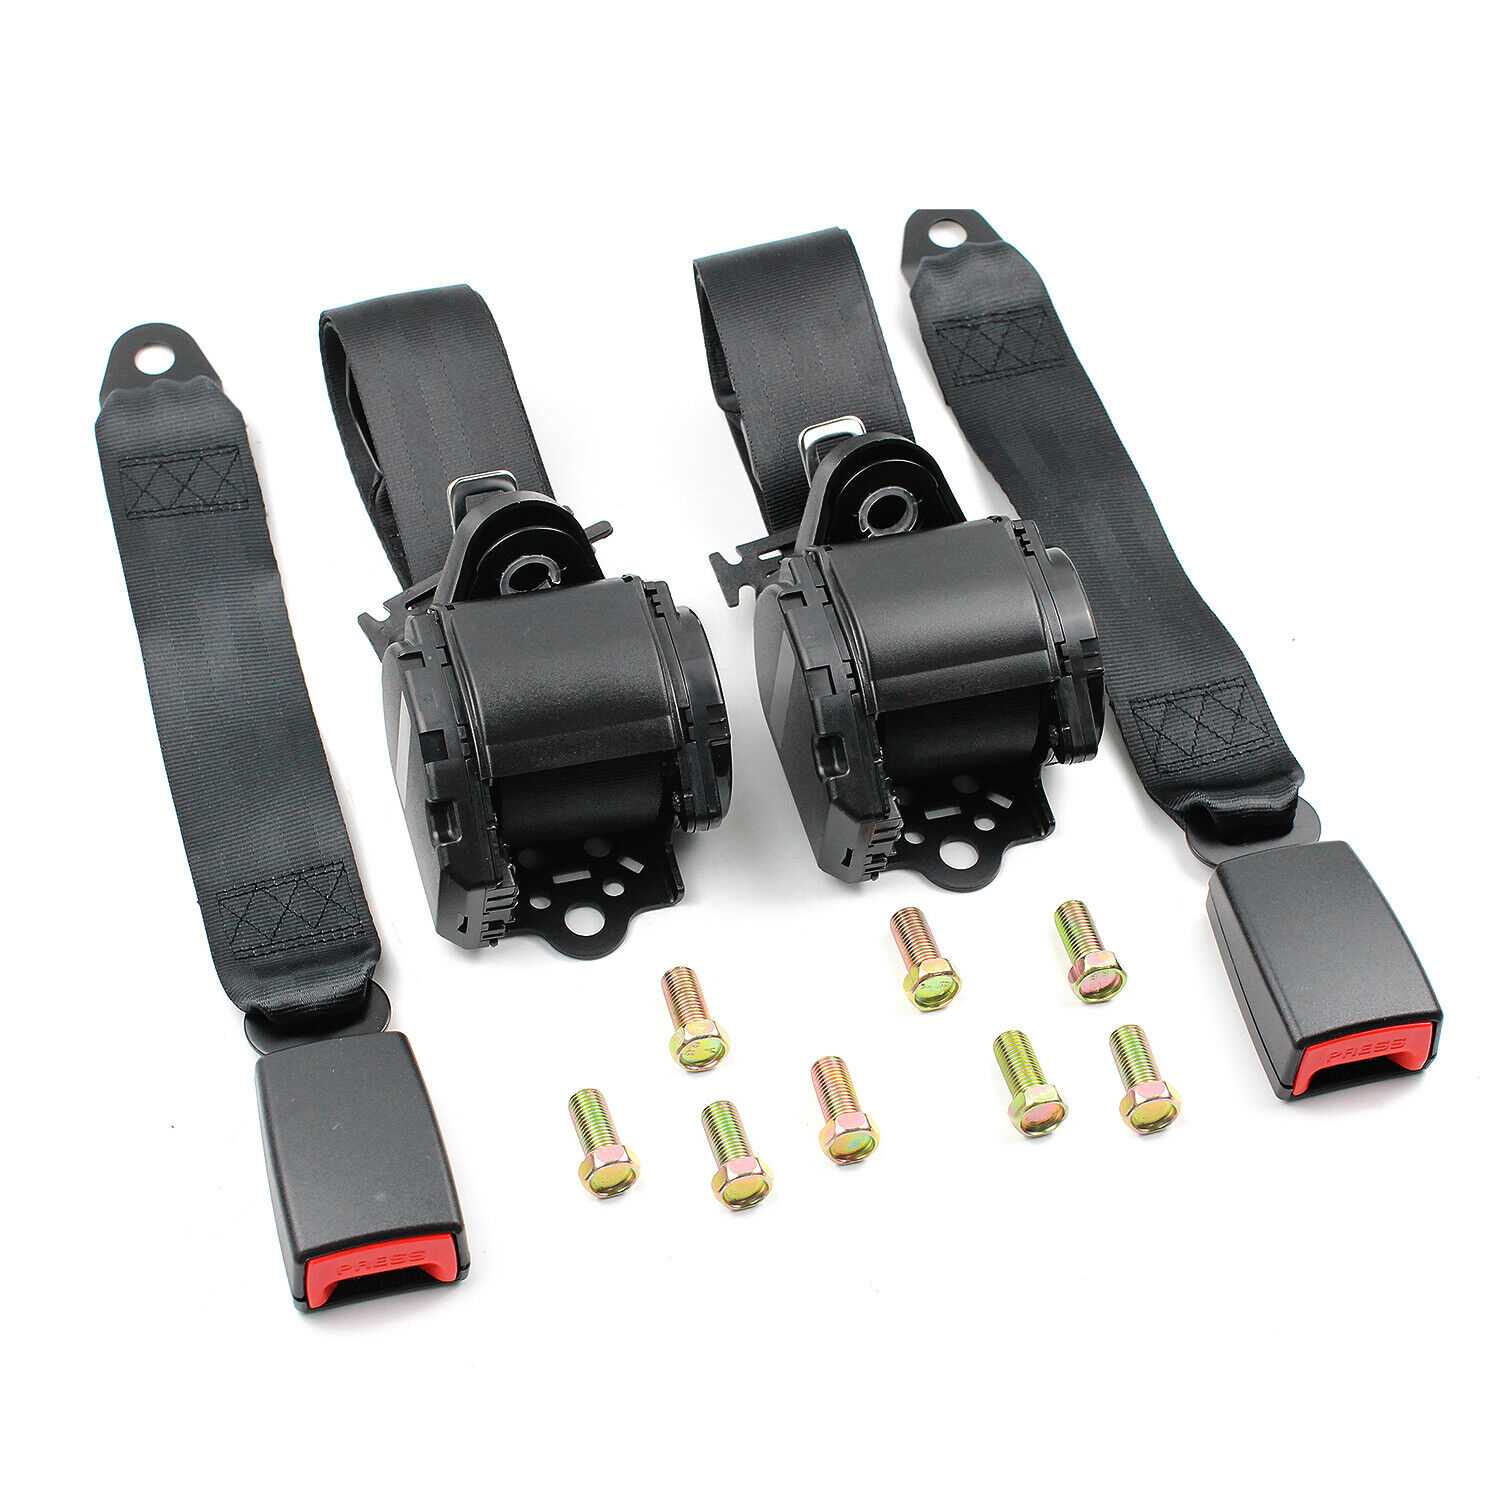 Retractable Adjustable 3 Point Safety Seat Belt Straps Universal Kit Car Vehicle